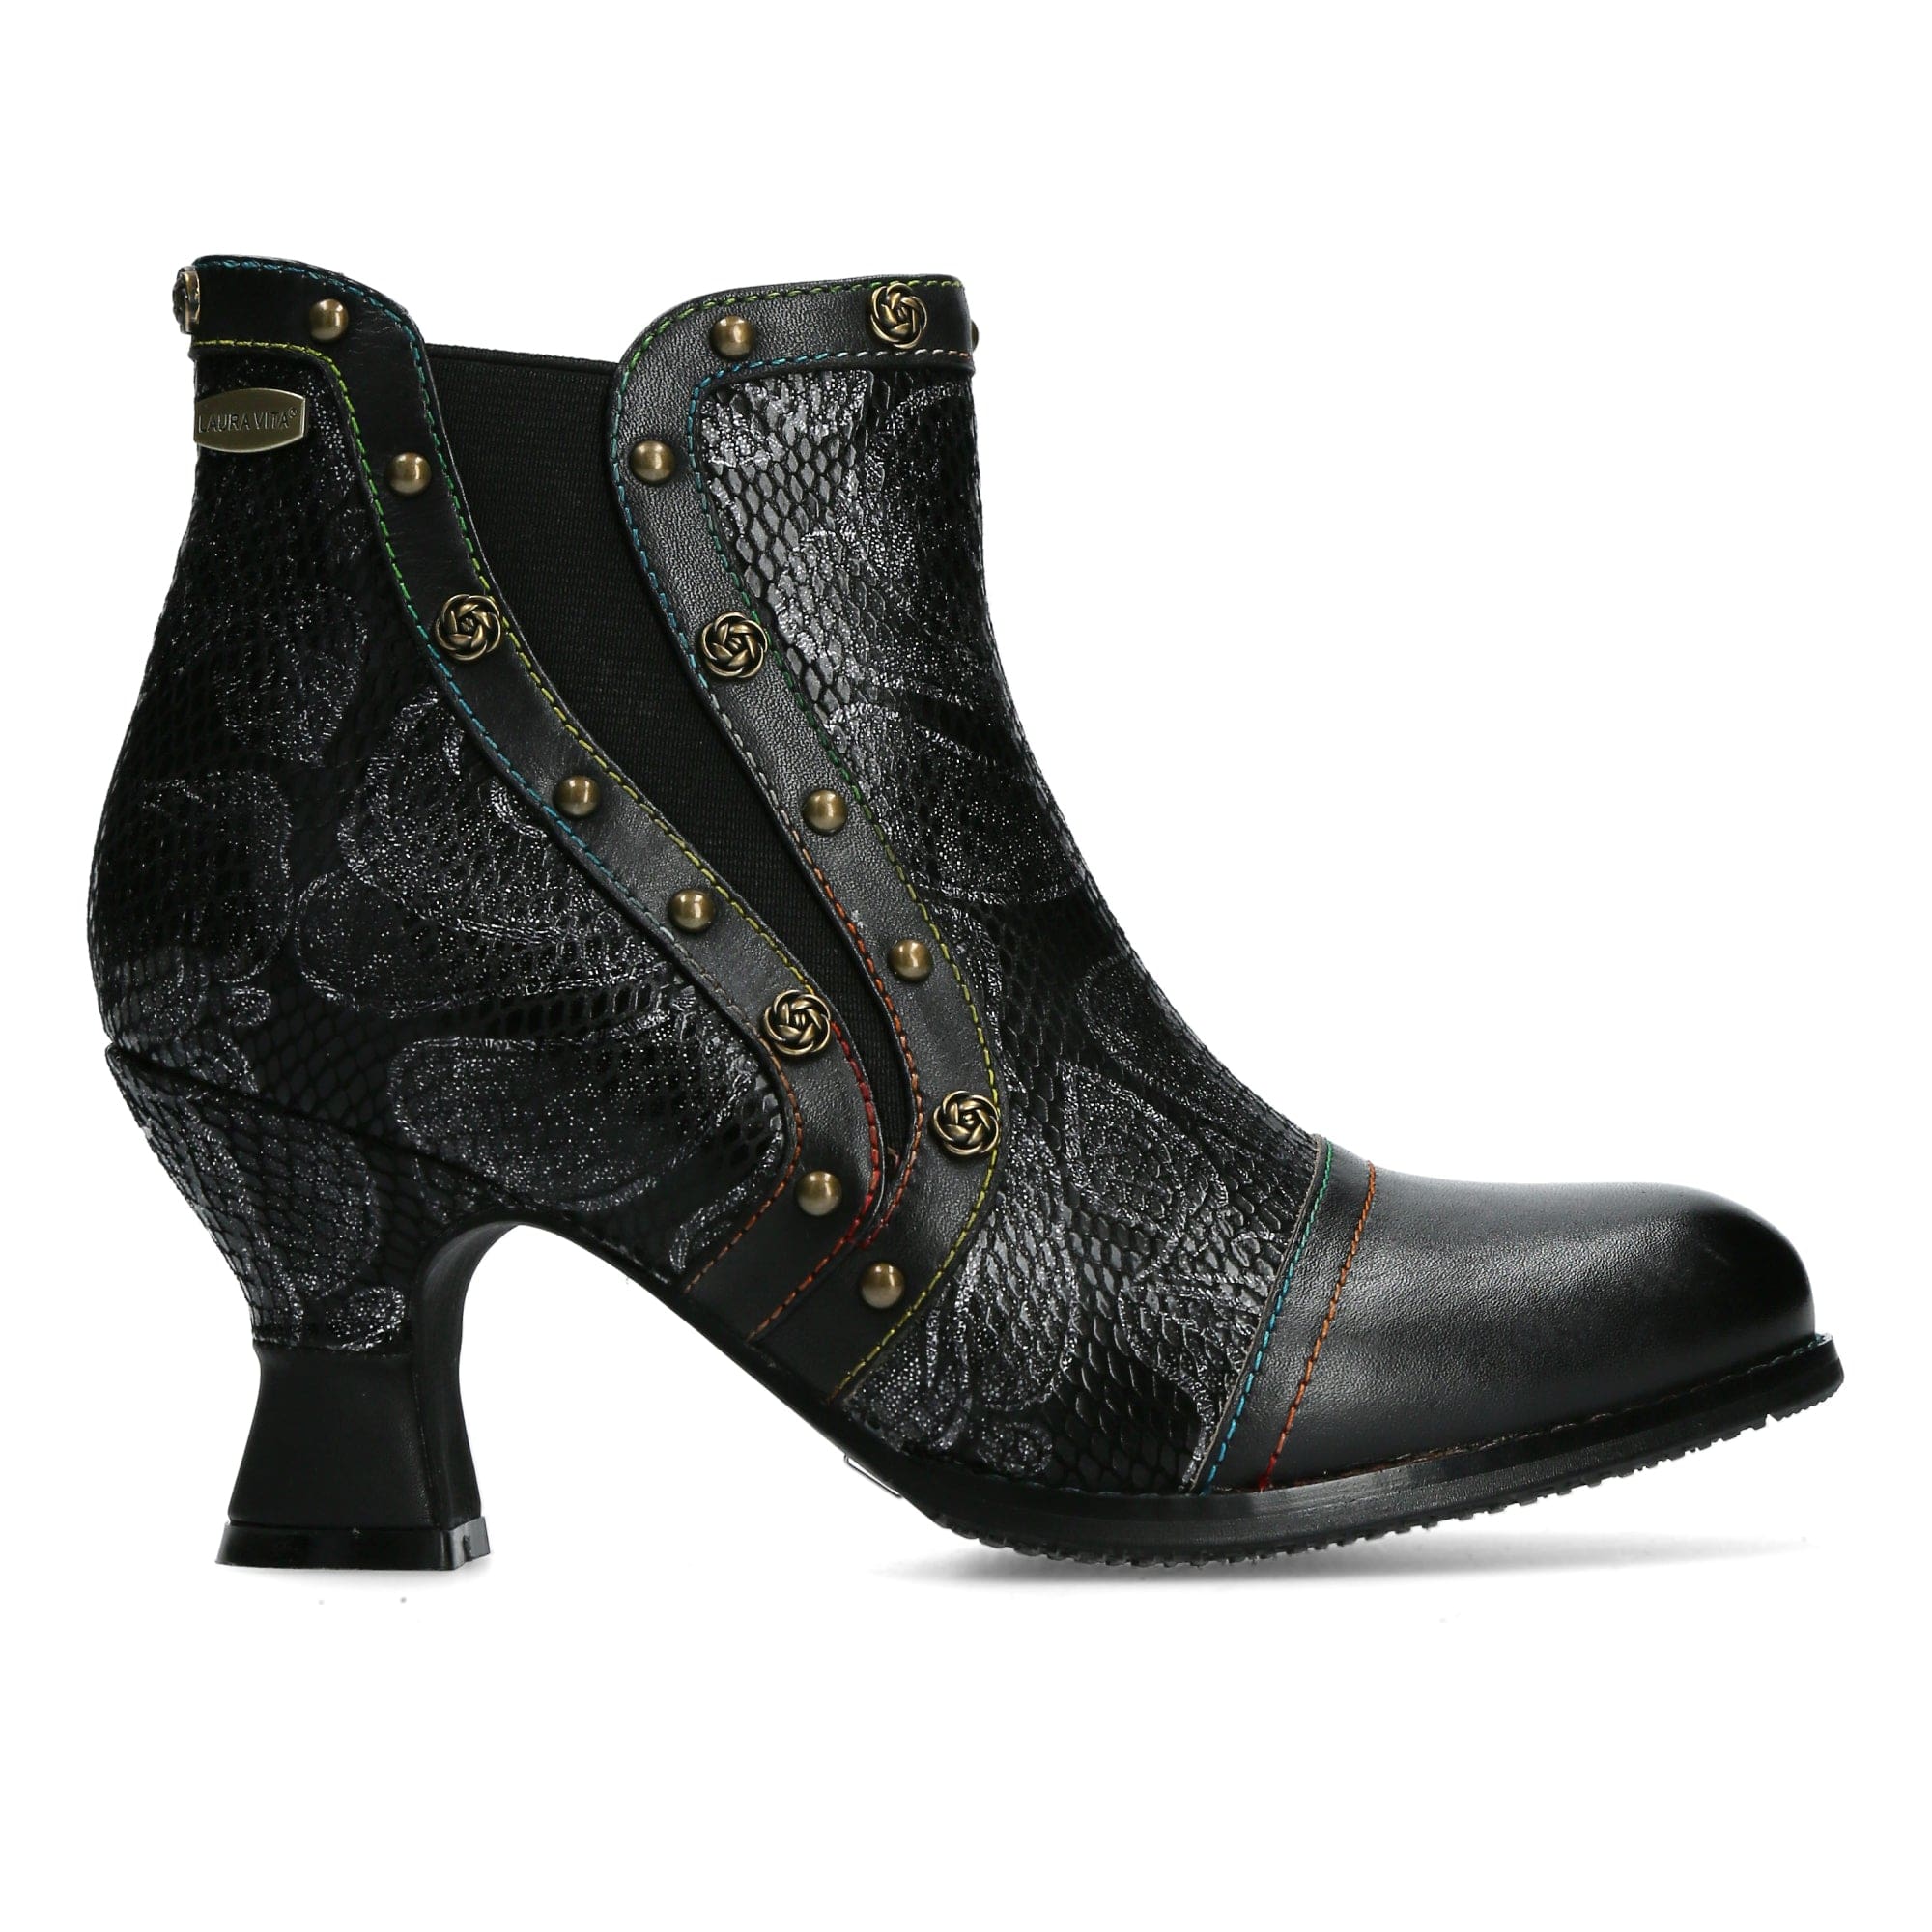 Chaussure GICGASO 01 - 35 / Noir - Boots